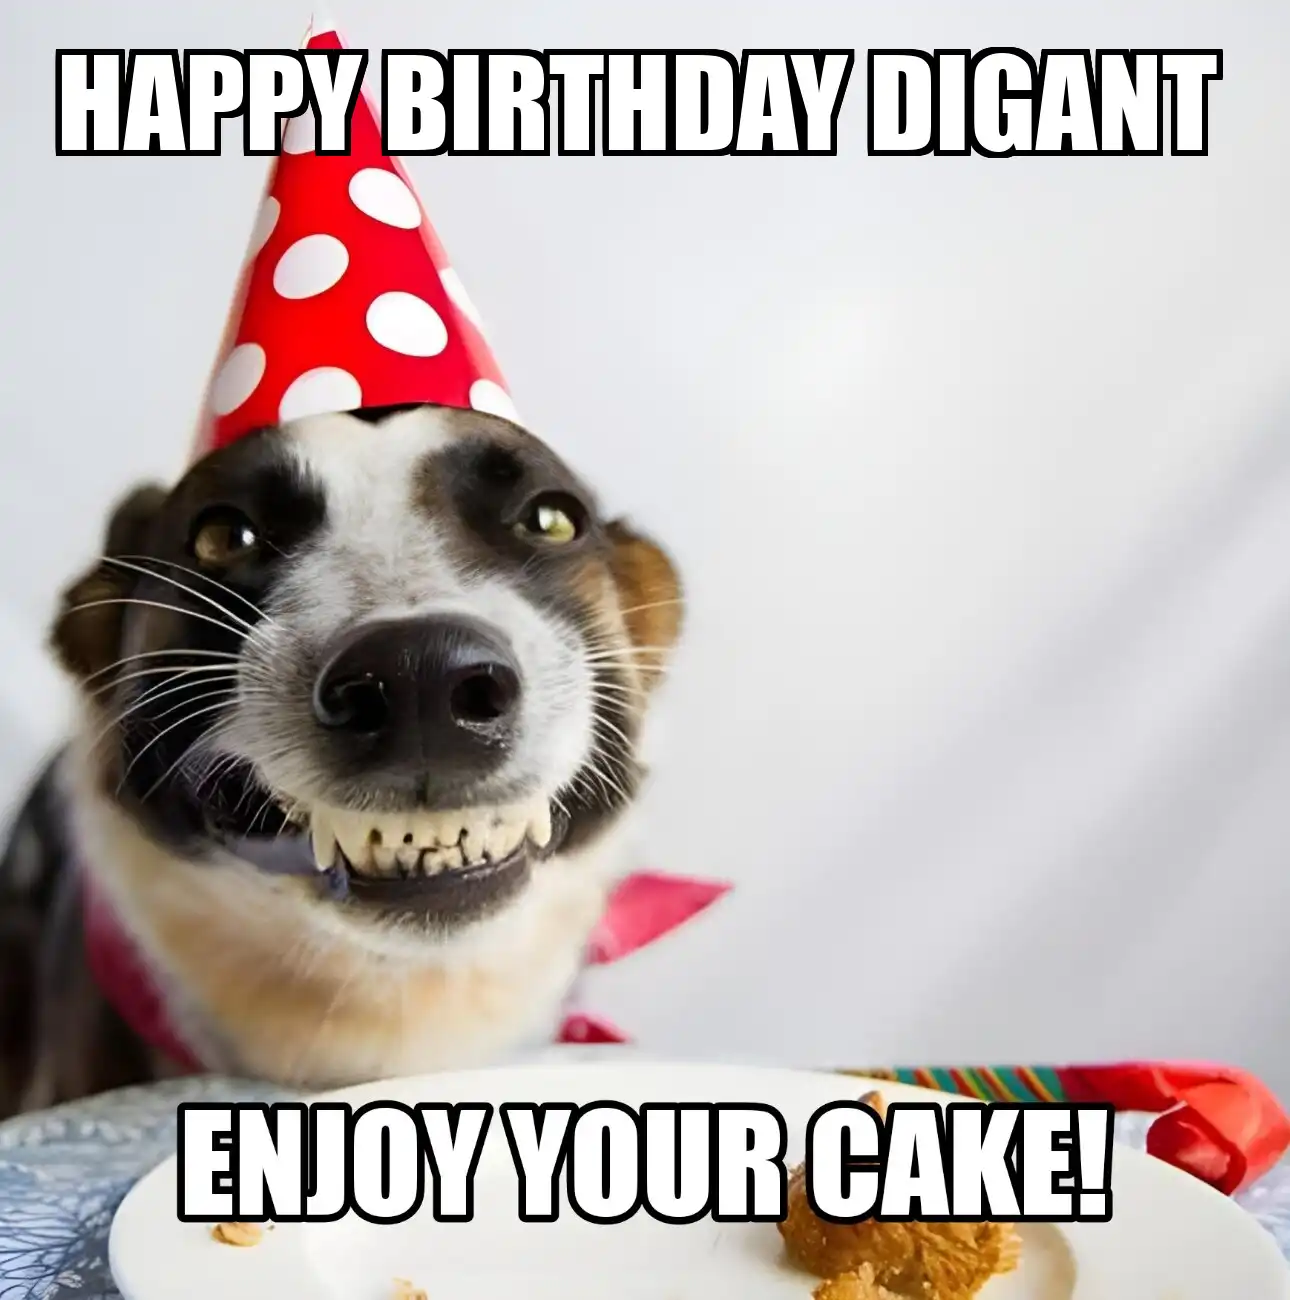 Happy Birthday Digant Enjoy Your Cake Dog Meme